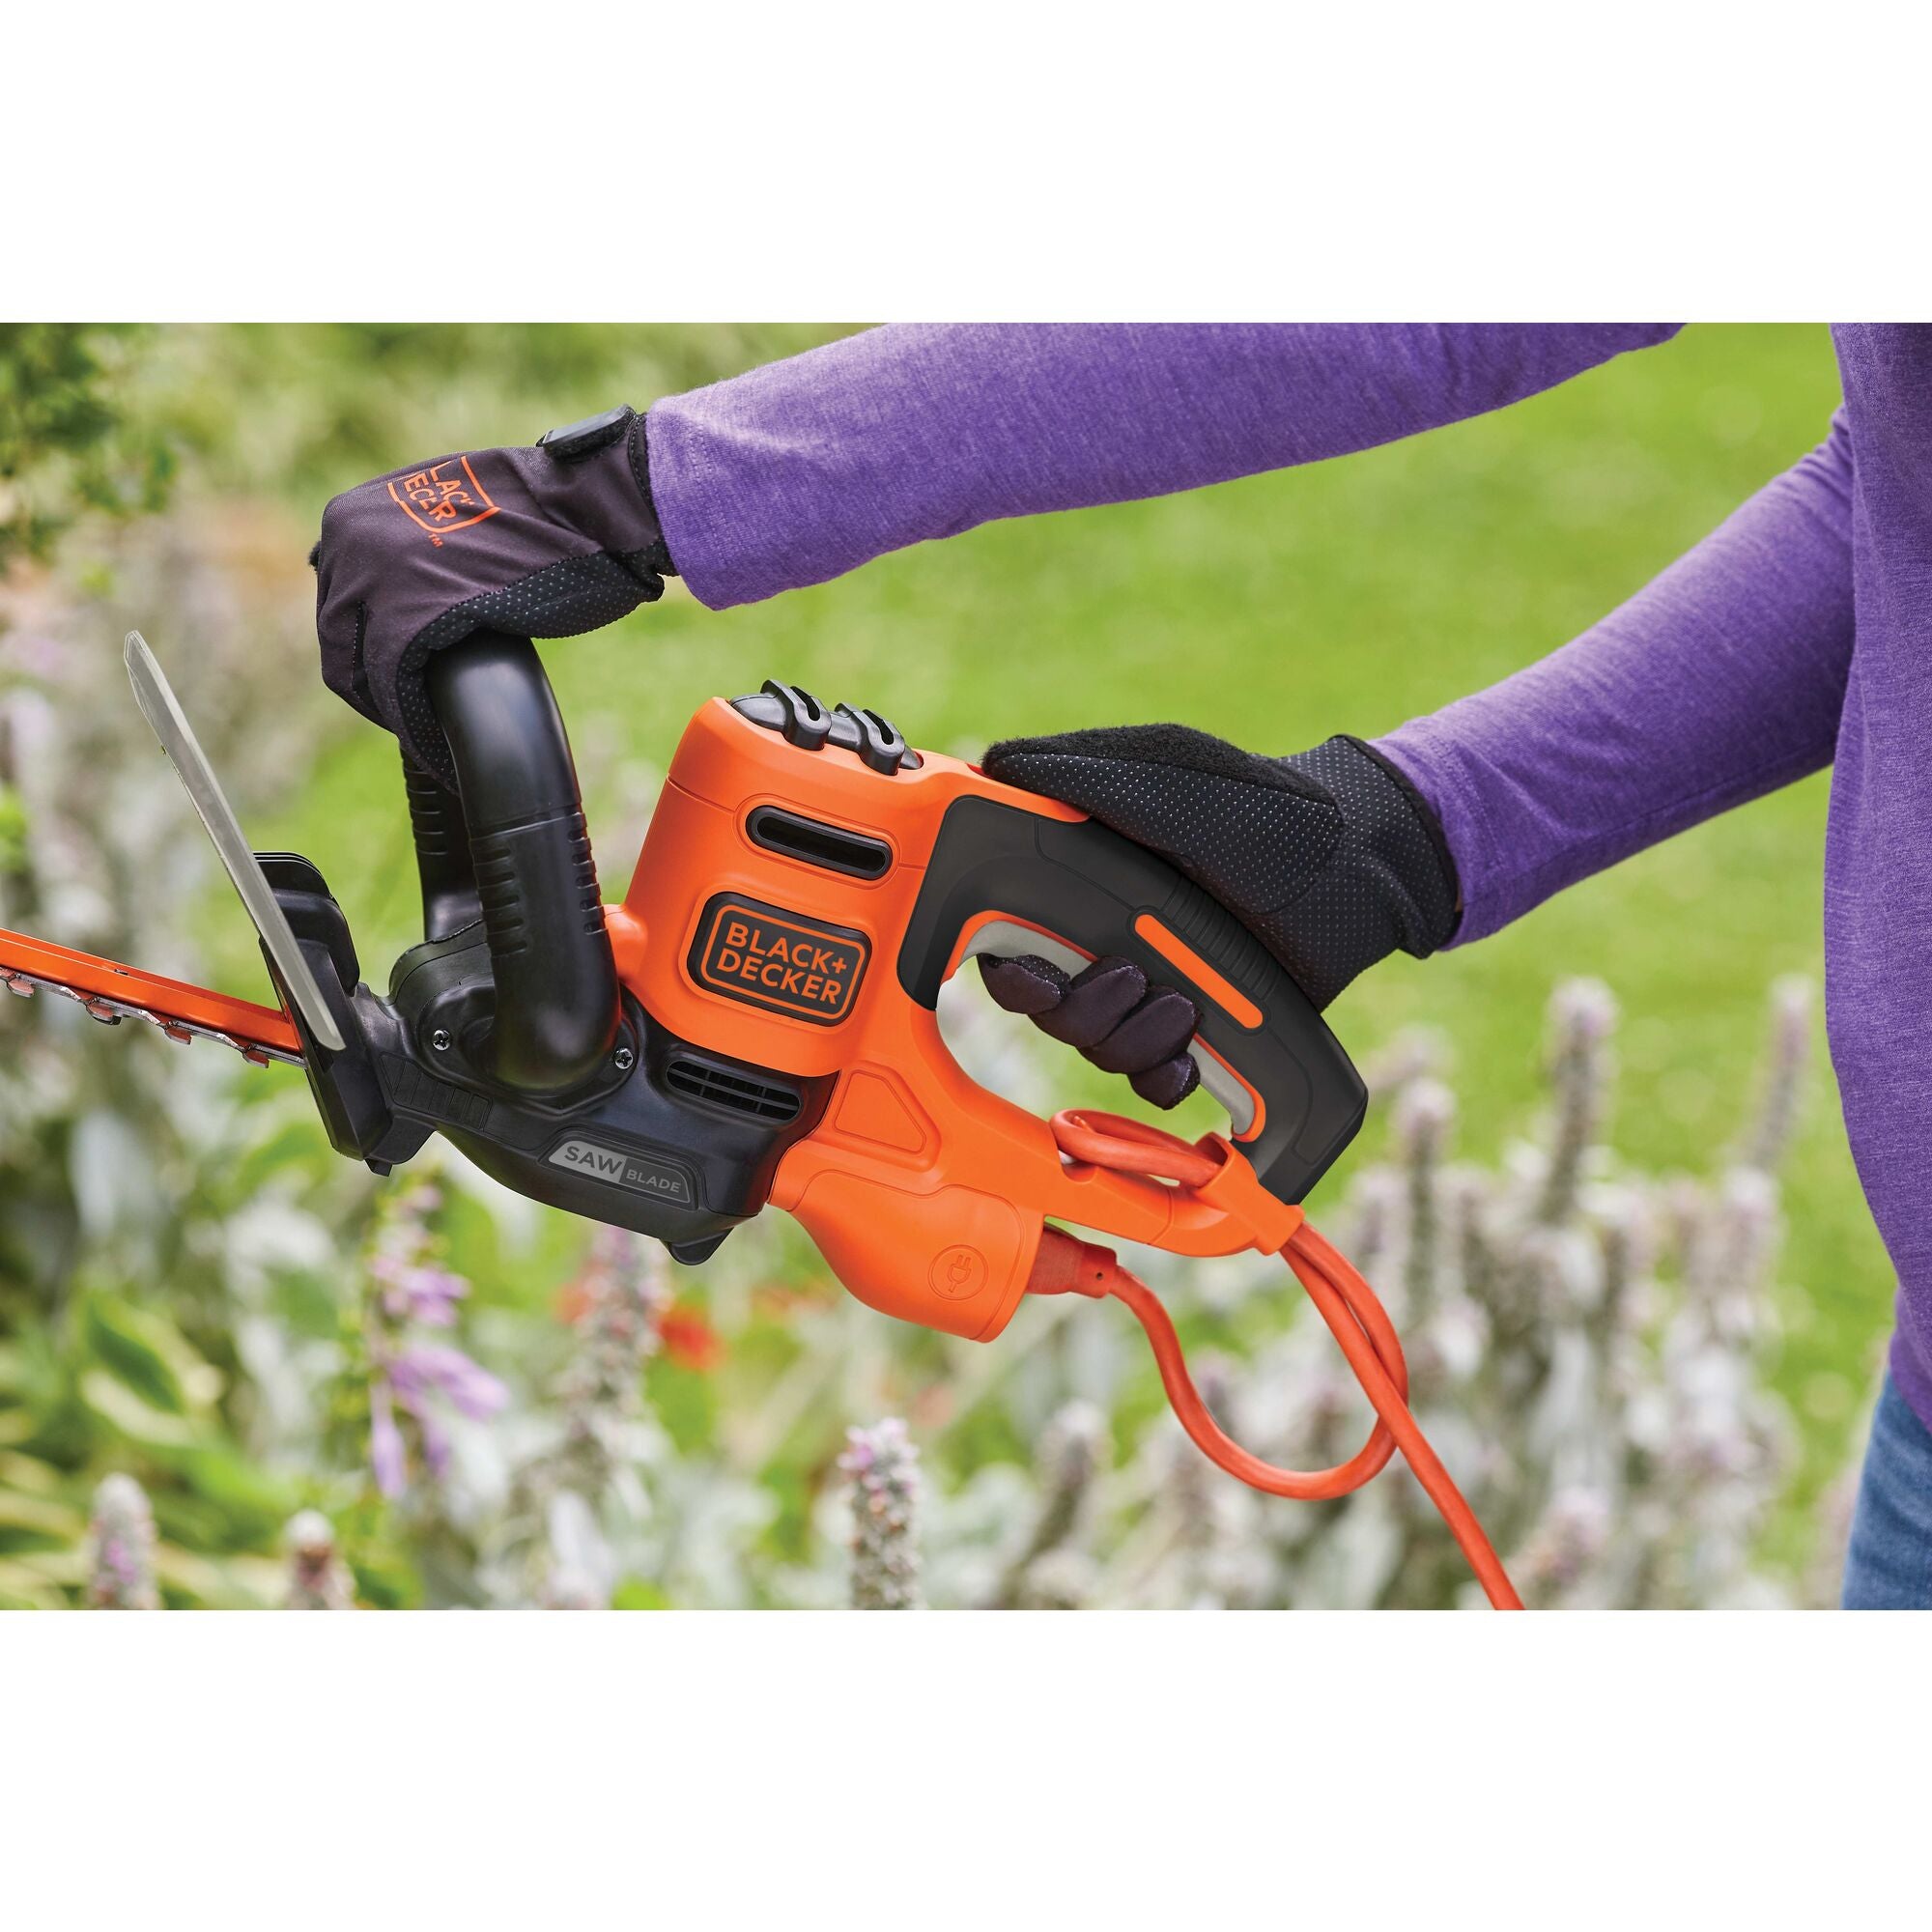 Black & Decker Hedge Trimmer FOR SALE - Garden Items - Portage